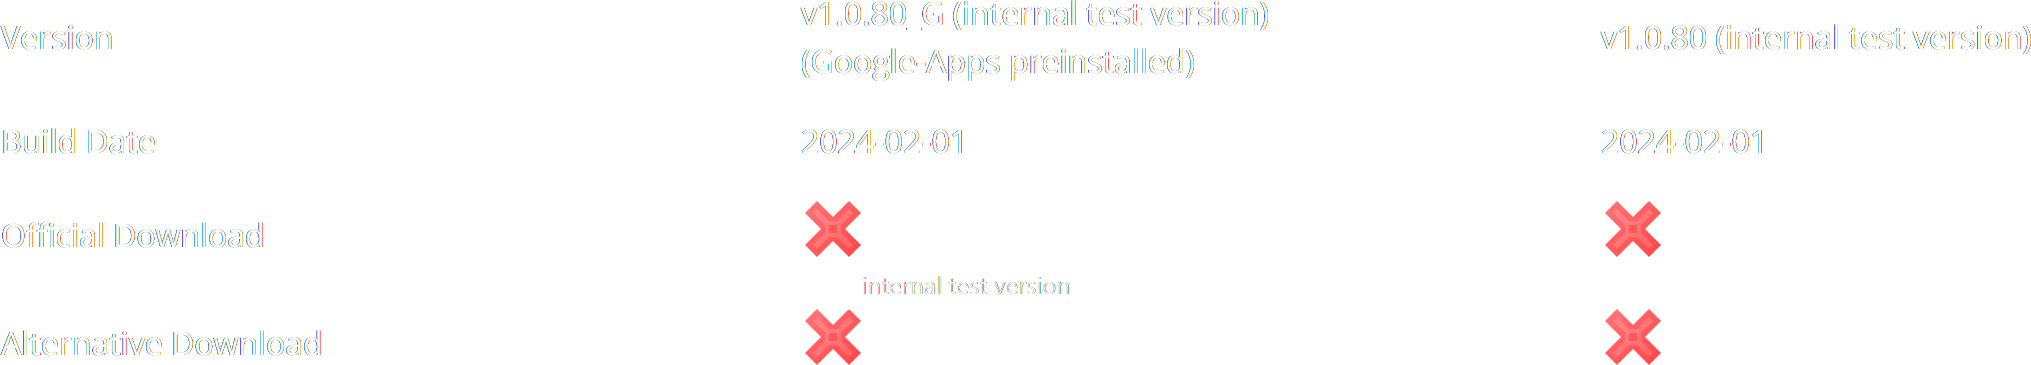 internal_test_version